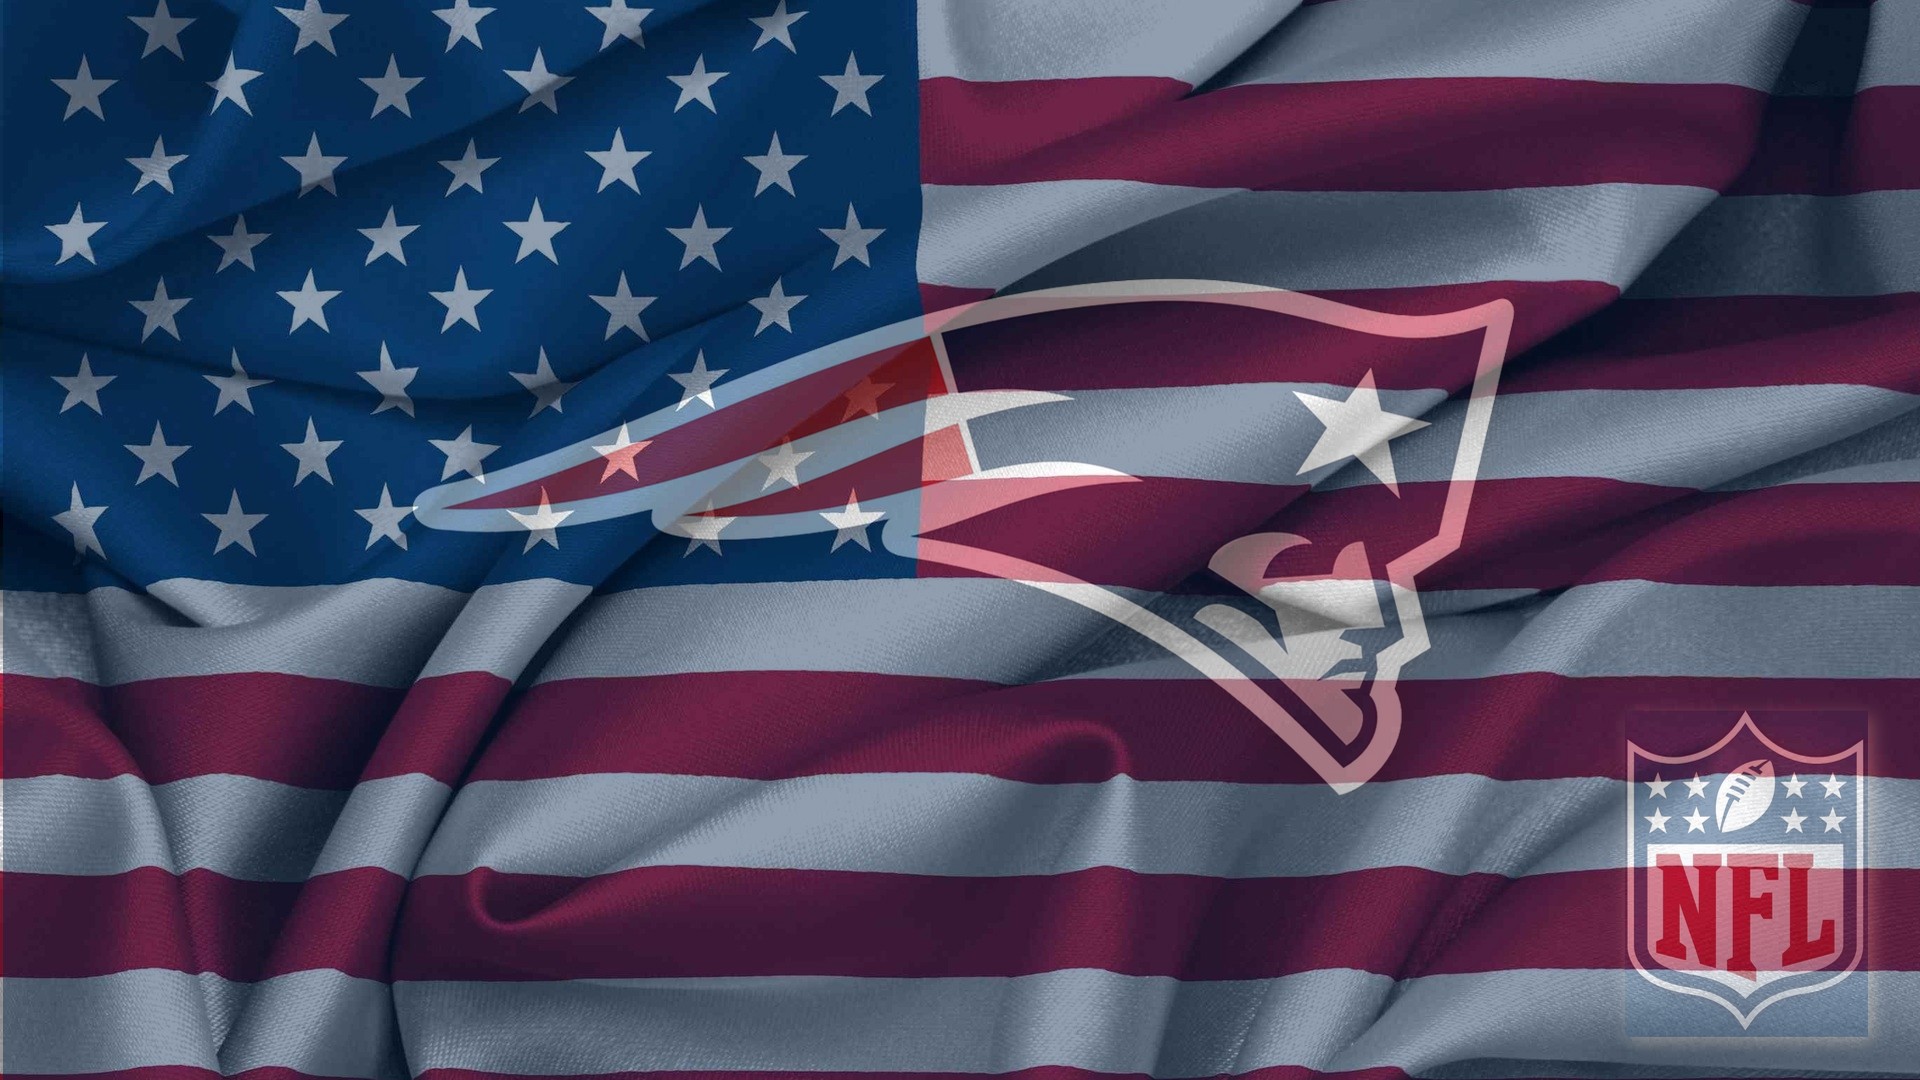 New England Patriots Logo With NFL Logo On USA Flag Wavy Canvas